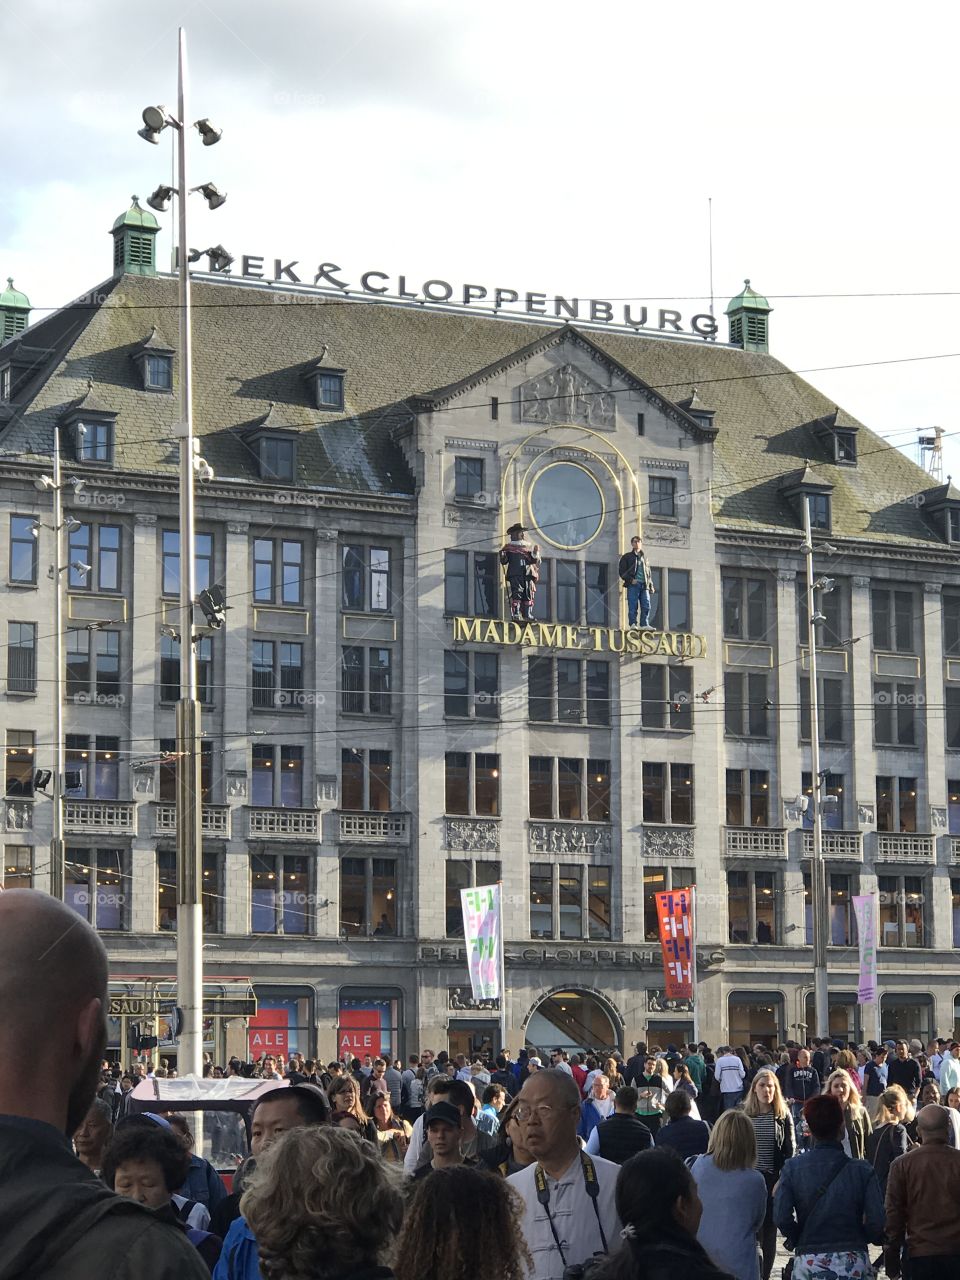 Amsterdam 
Building 
History 
Plek&Clopperburg 
Madam Tussaud